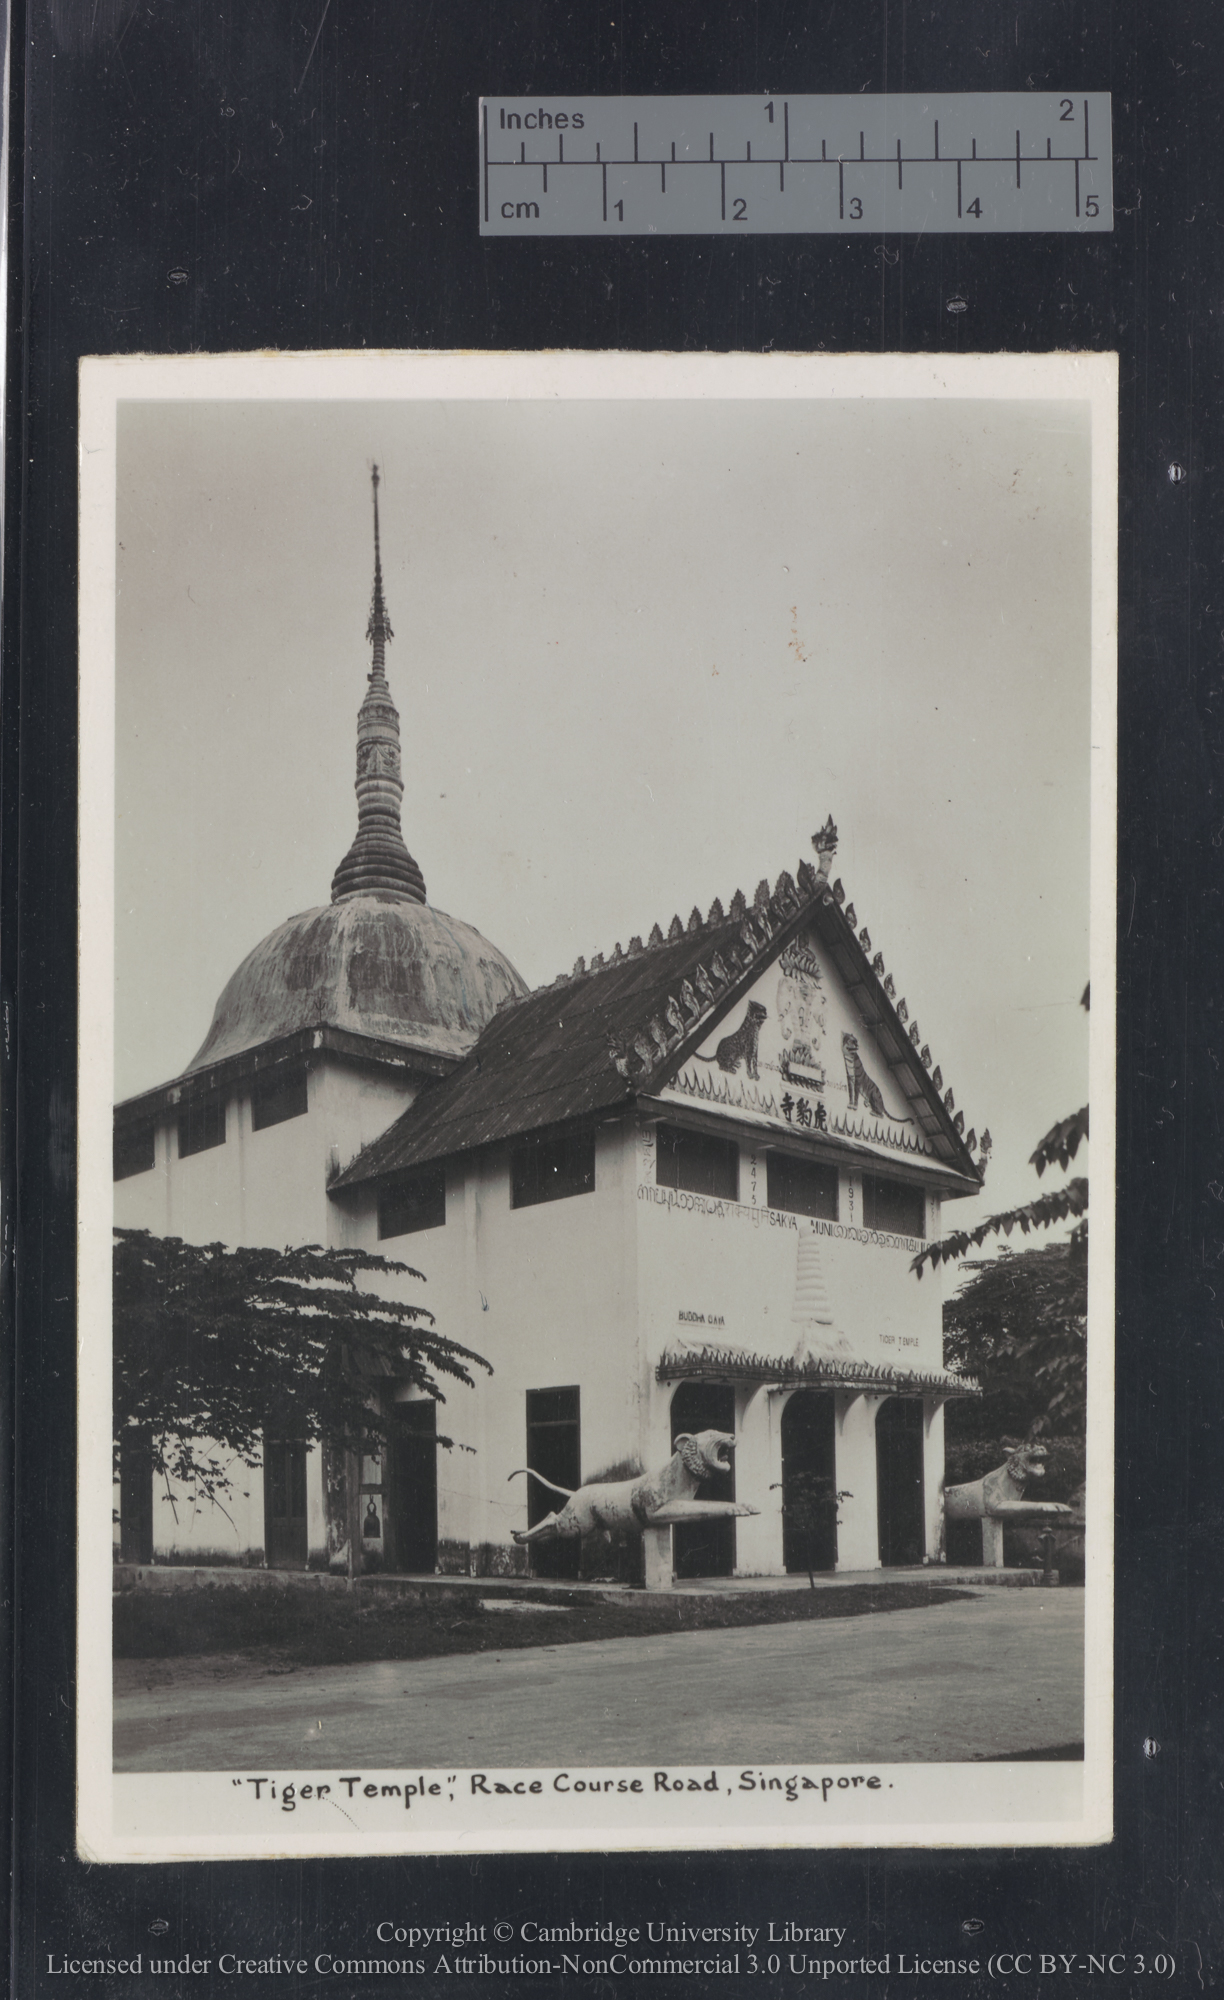 Tiger Temple, Race Course Road, Singapore, 1930 - 1939